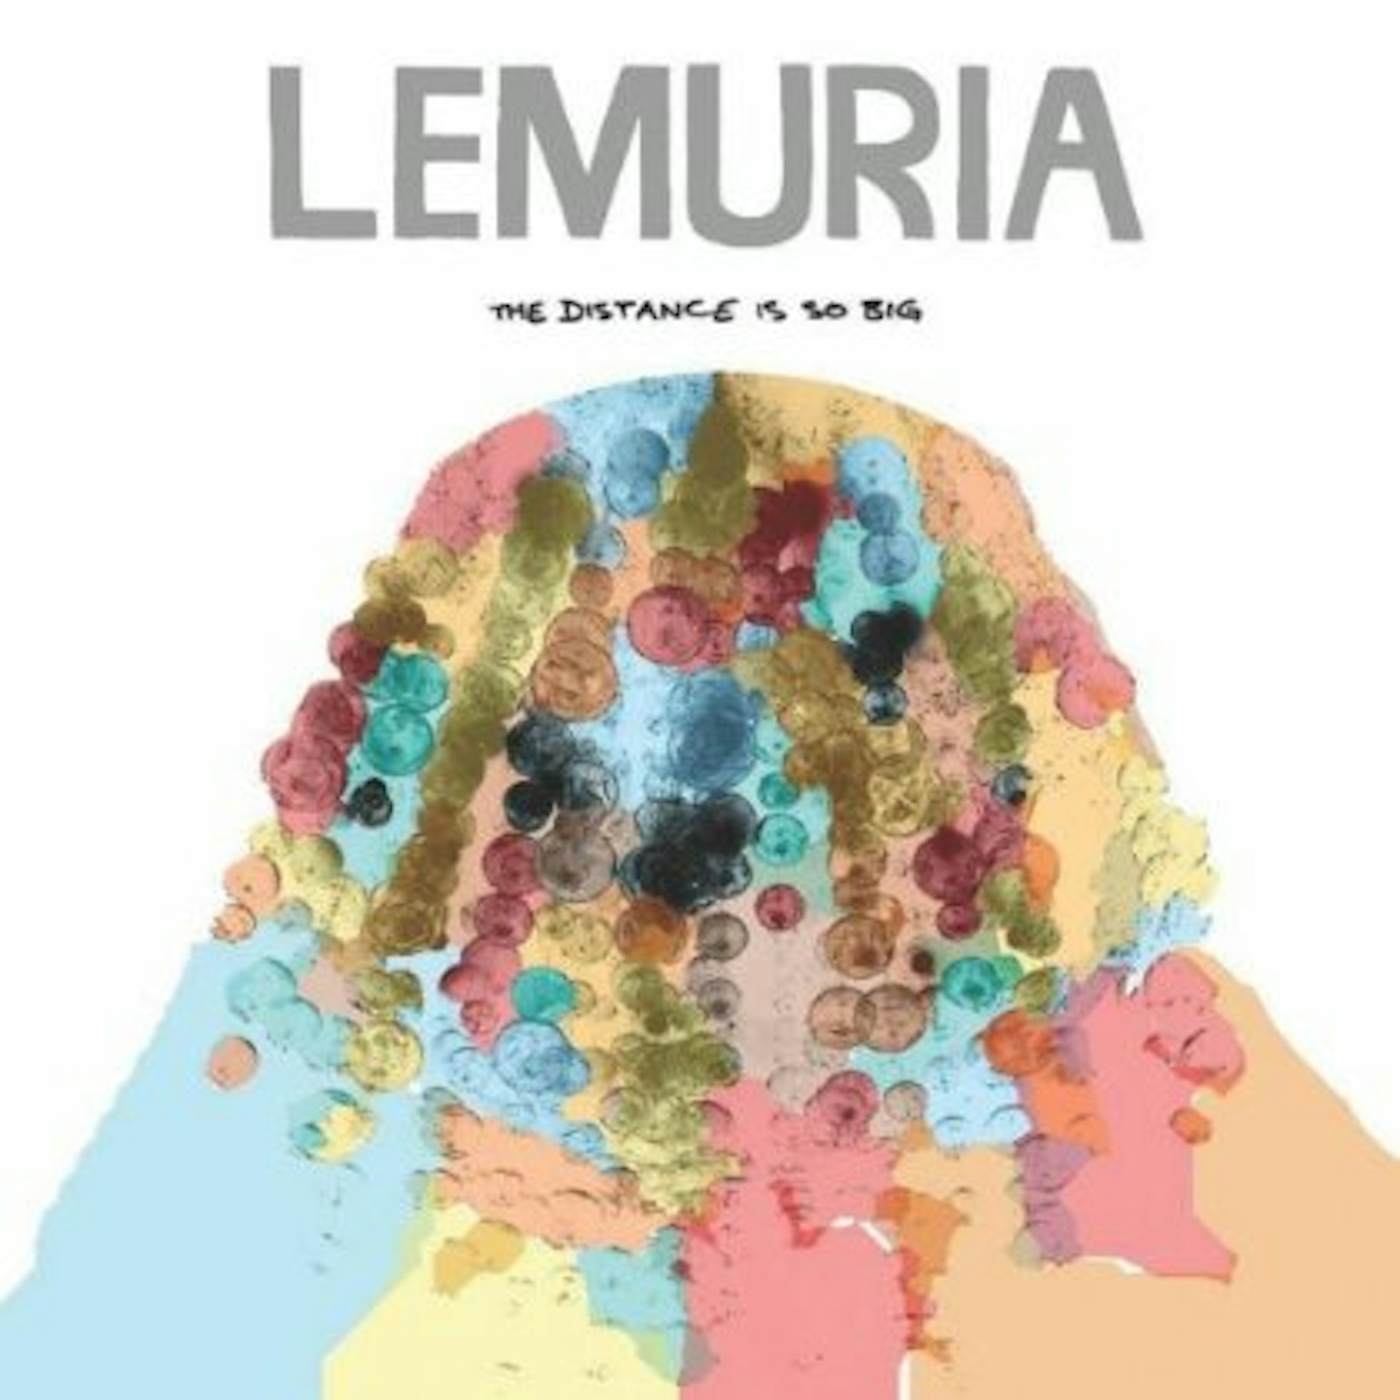 Lemuria DISTANCE IS SO BIG Vinyl Record